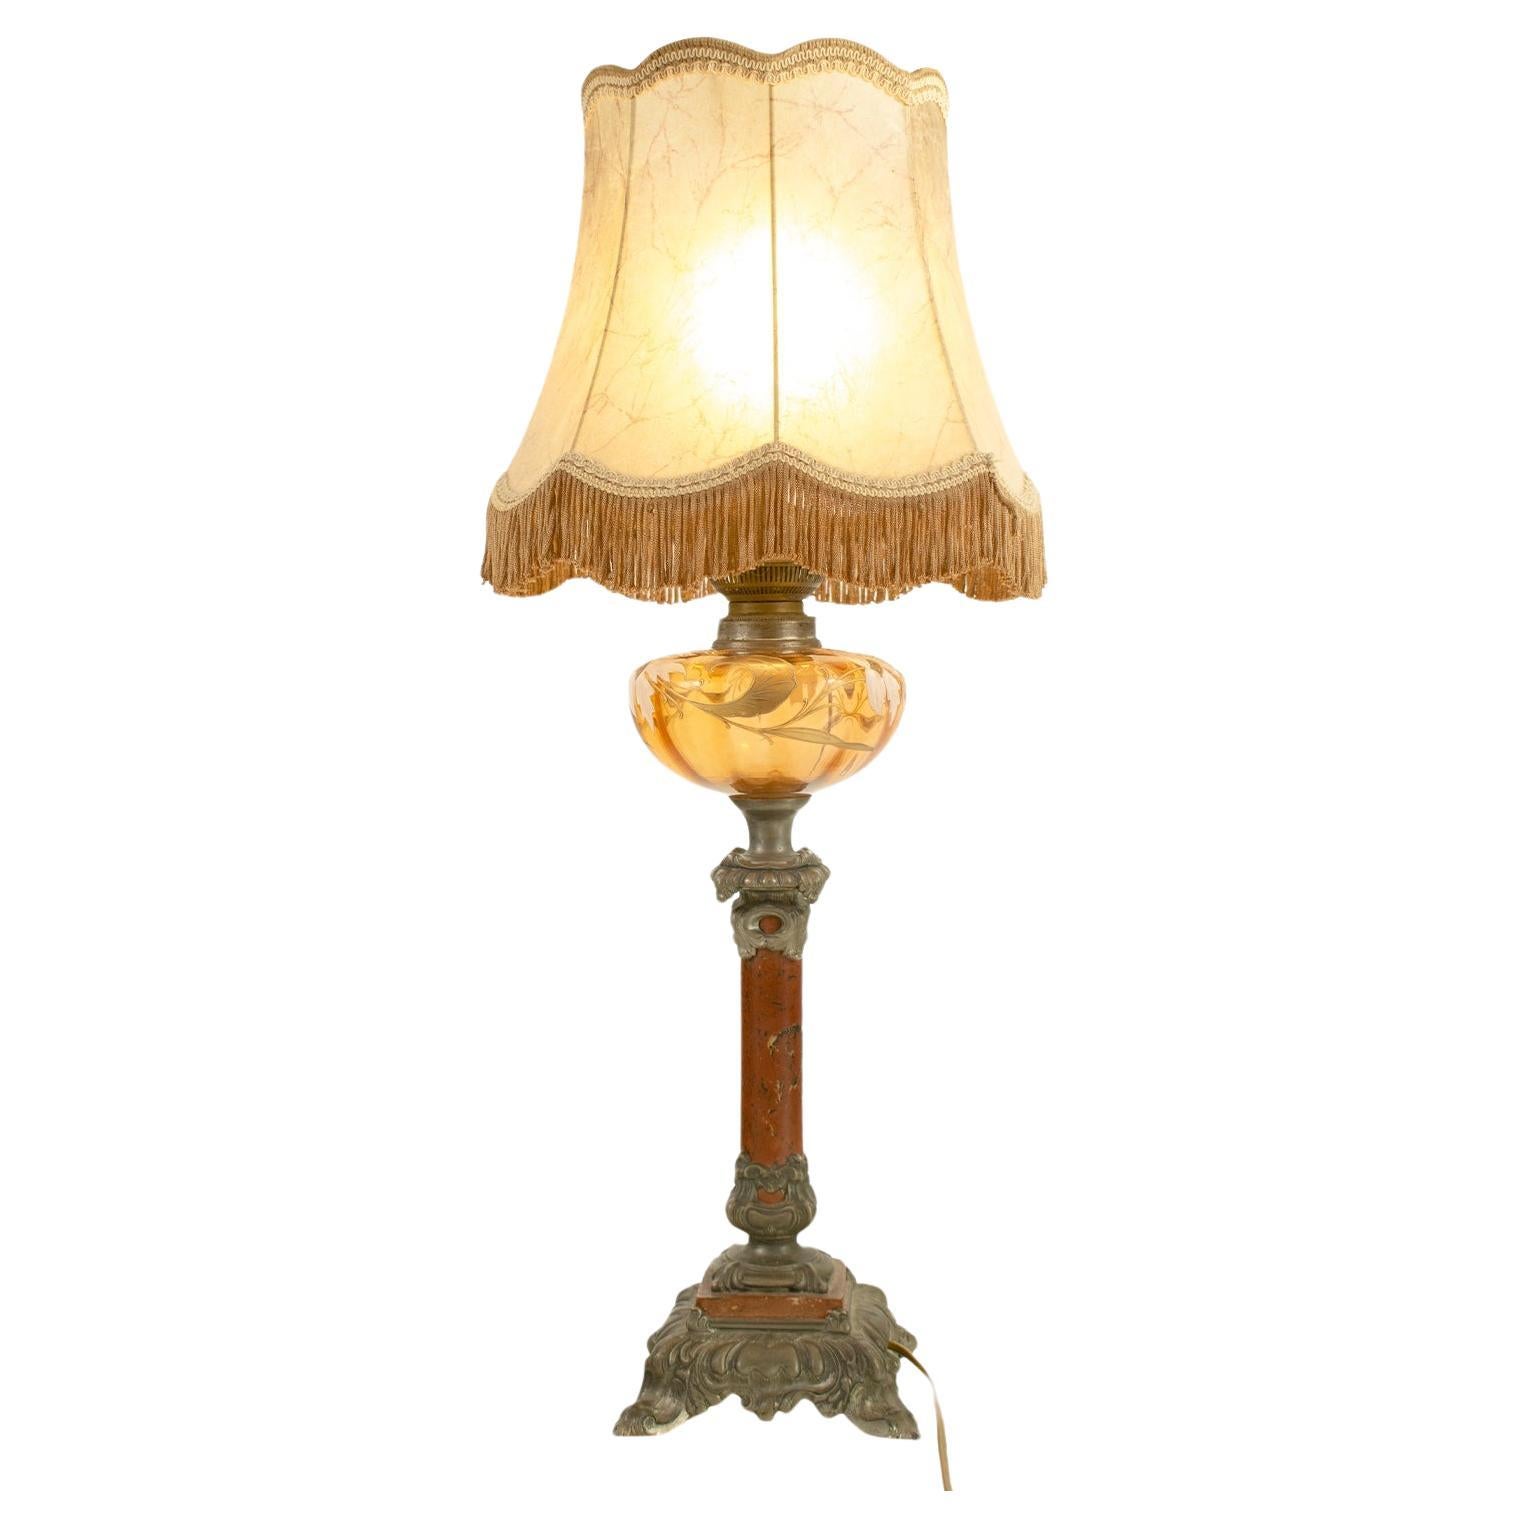 ART NOUVEAU PETROL LAMP converted - French